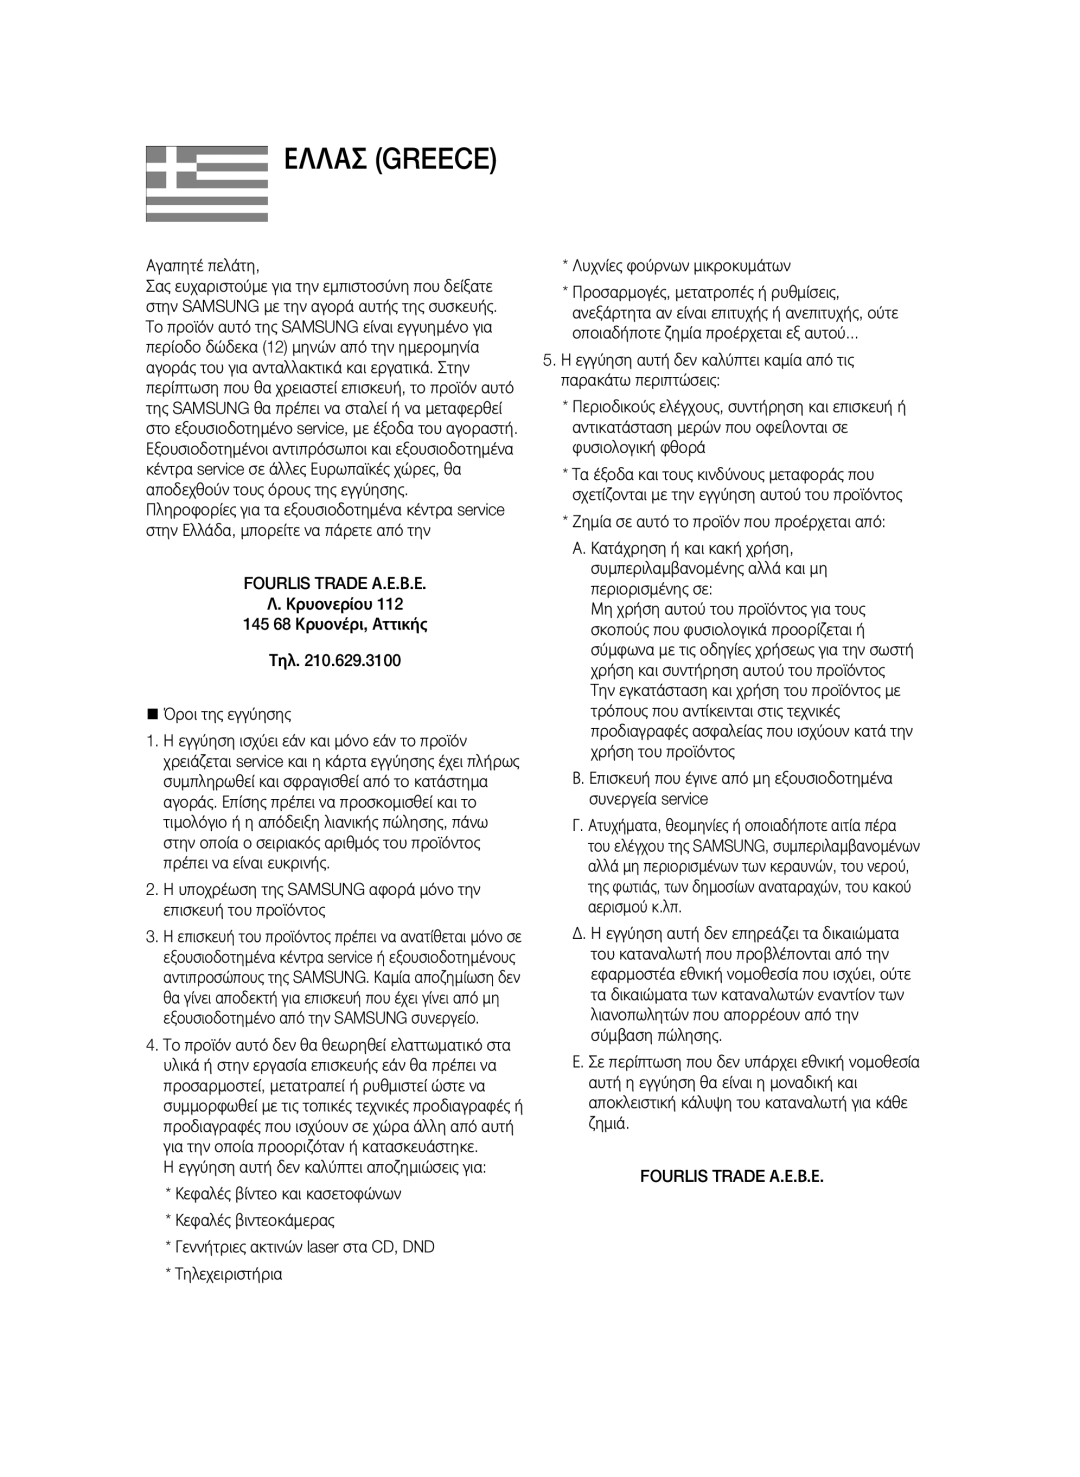 Samsung BD-P1580/EDC manual Ελλασ Greece 